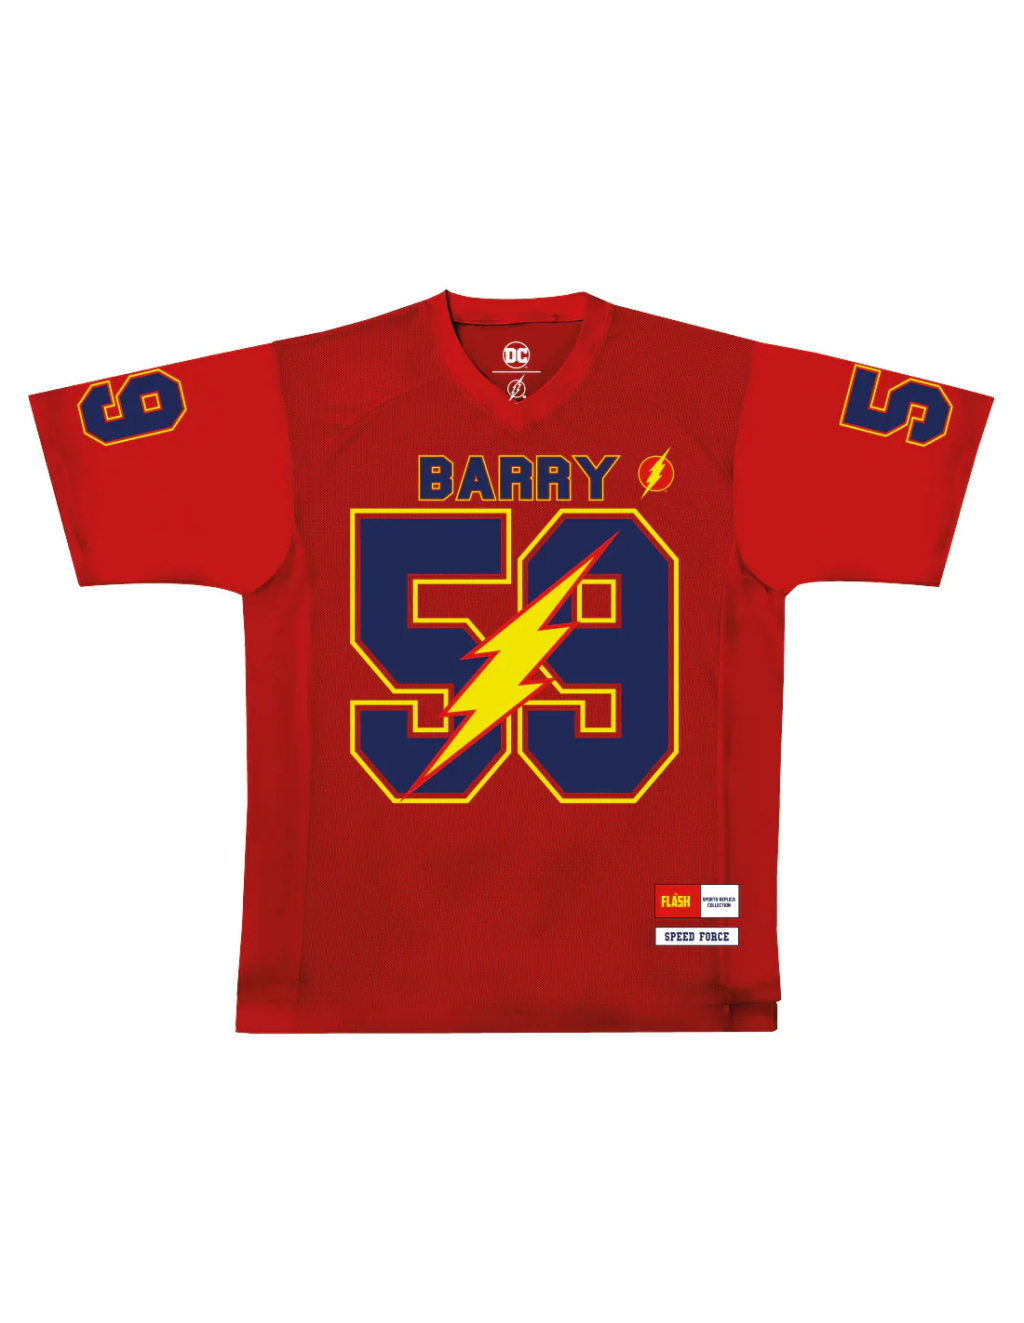 DC - The Flash - T-Shirt Sports US Replica unisex (XXL)